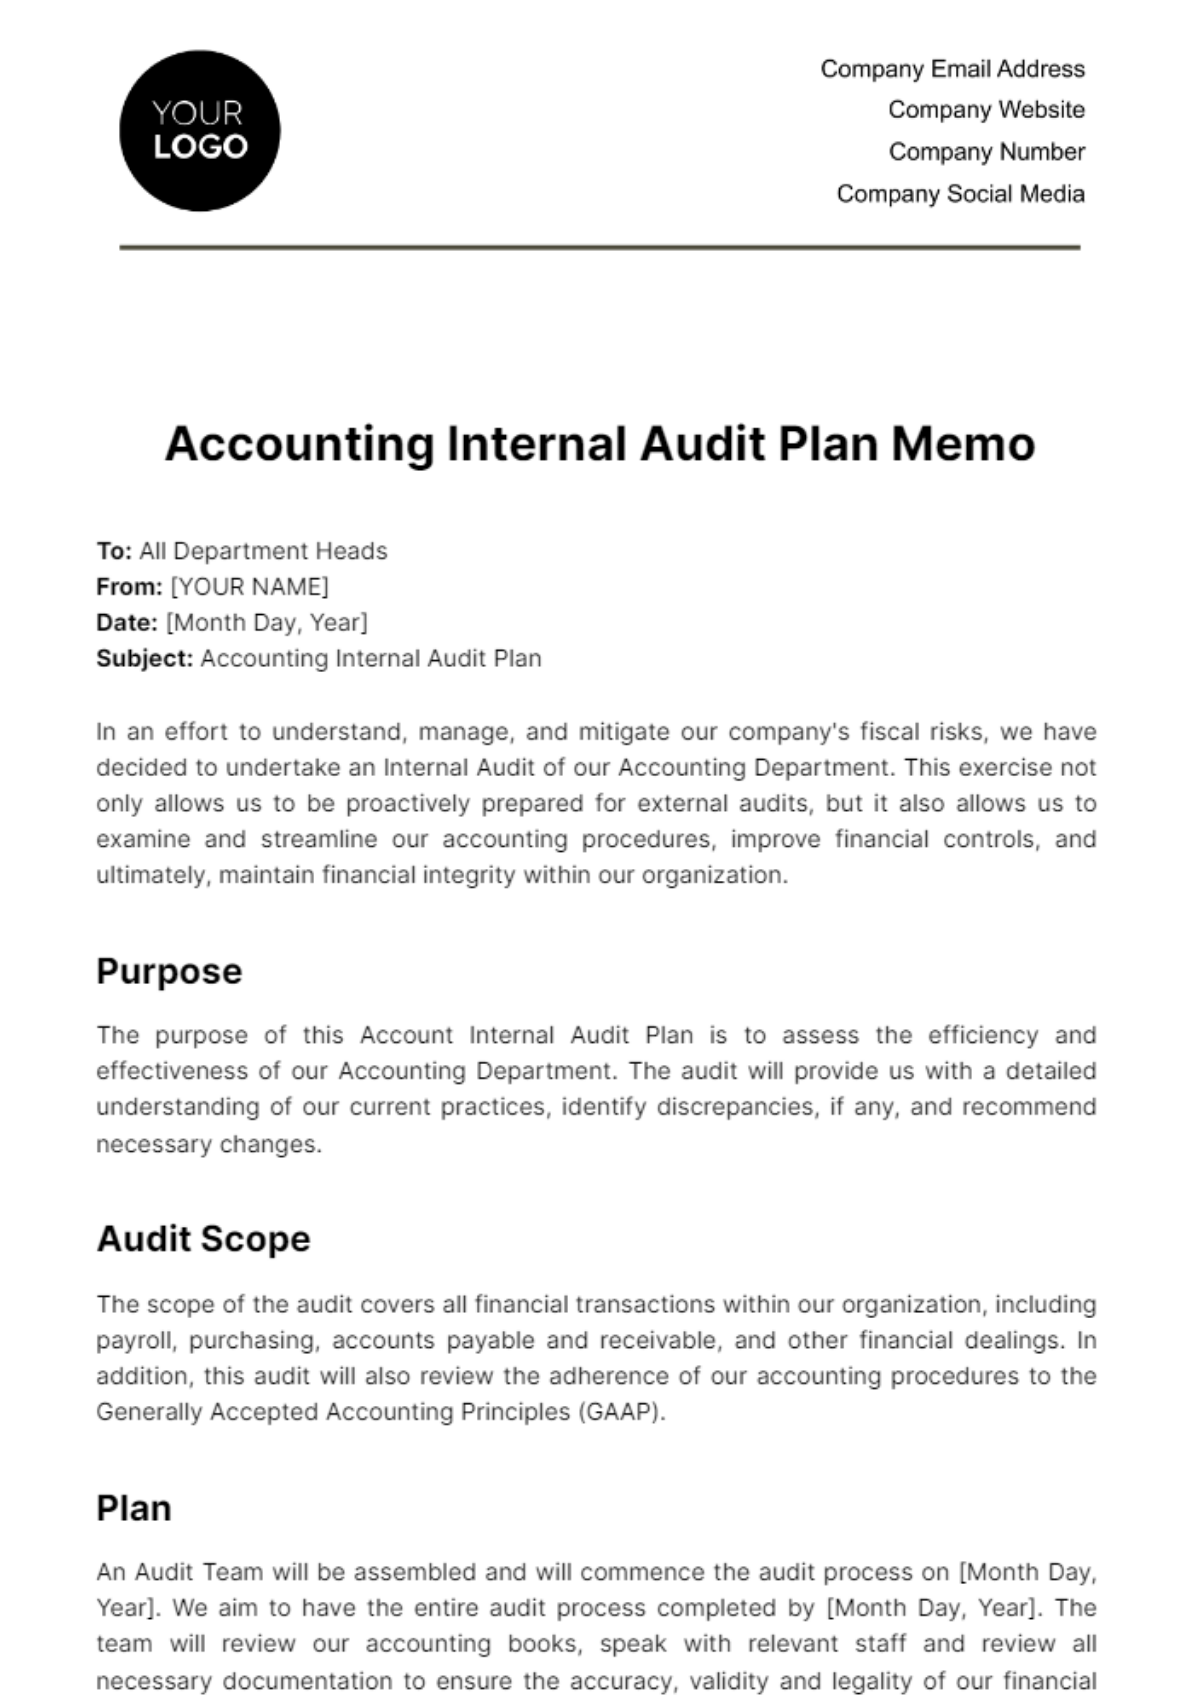 Free Accounting Internal Audit Plan Memo Template